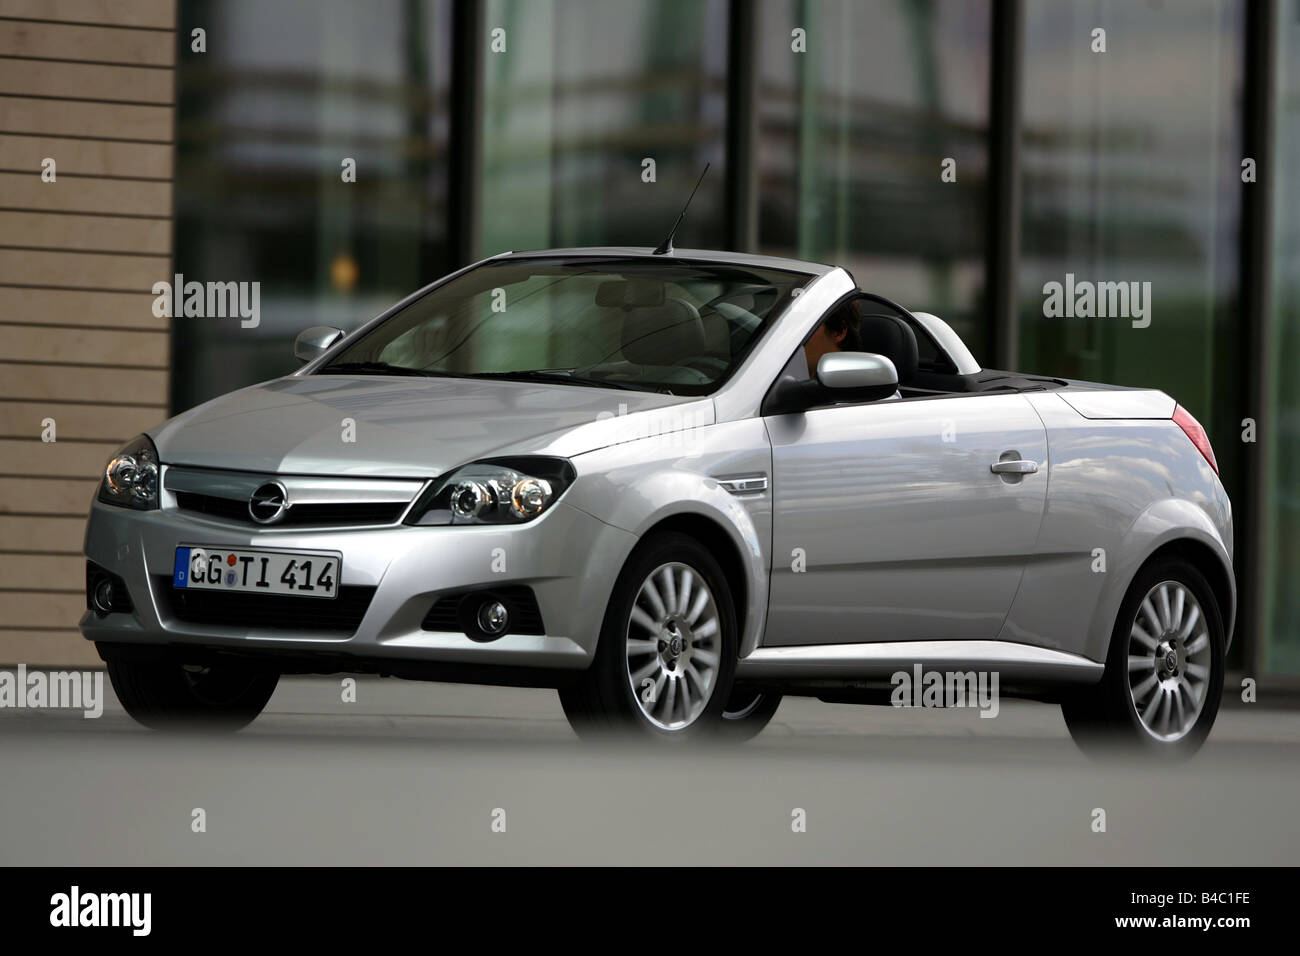 https://c8.alamy.com/comp/B4C1FE/car-opel-tigra-twin-top-18-convertible-model-year-2004-silver-driving-B4C1FE.jpg